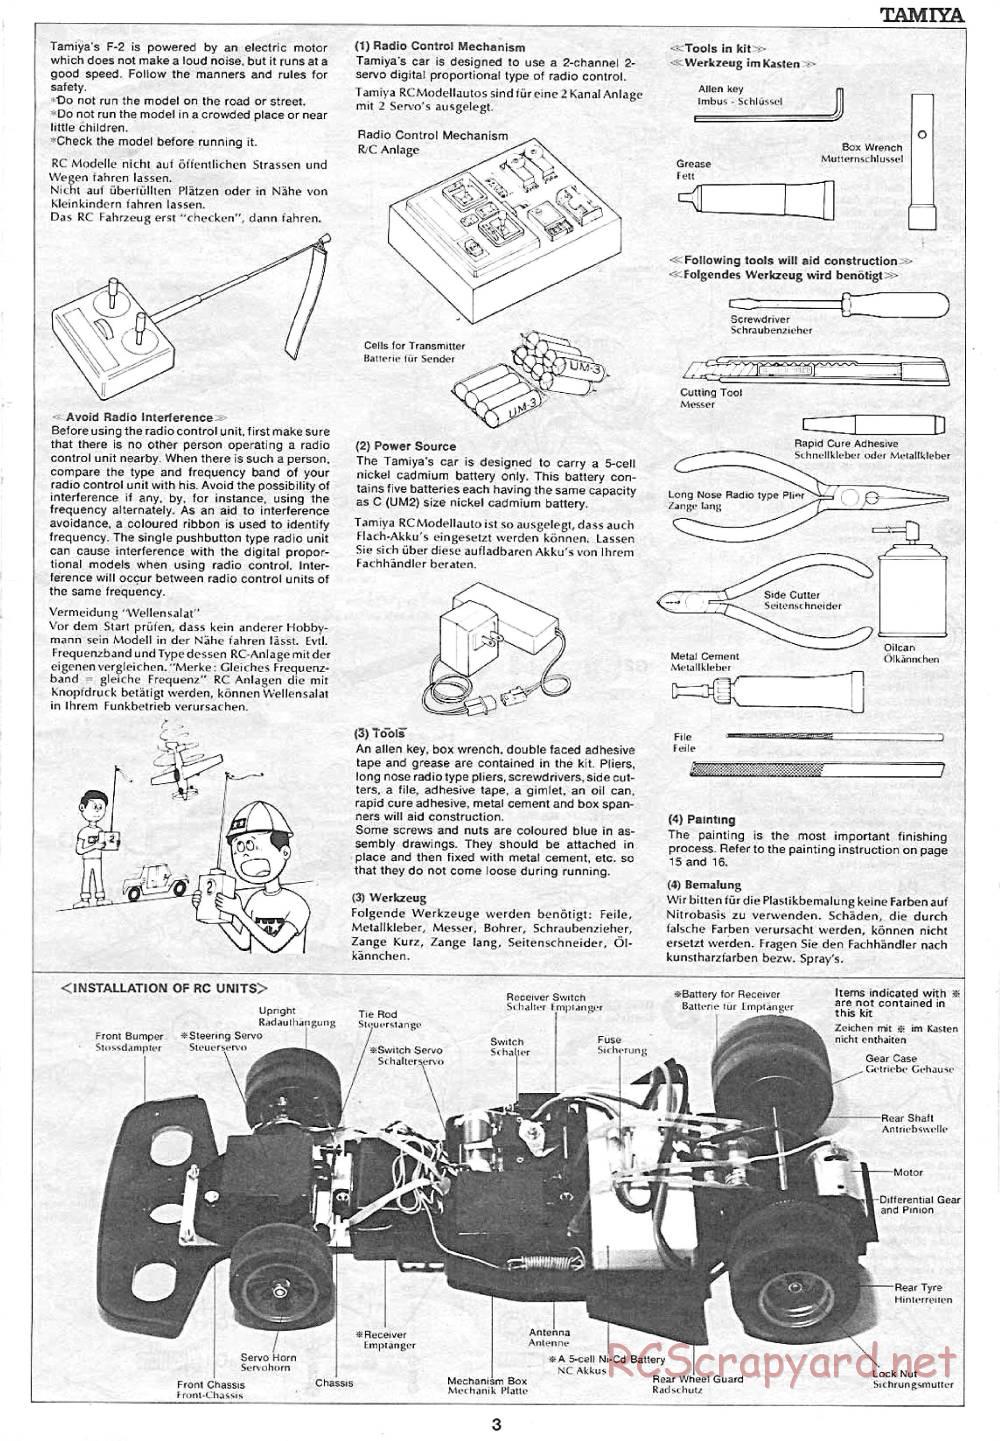 Tamiya - Martini Mk22 Renault (F2) - 58014 - Manual - Page 3